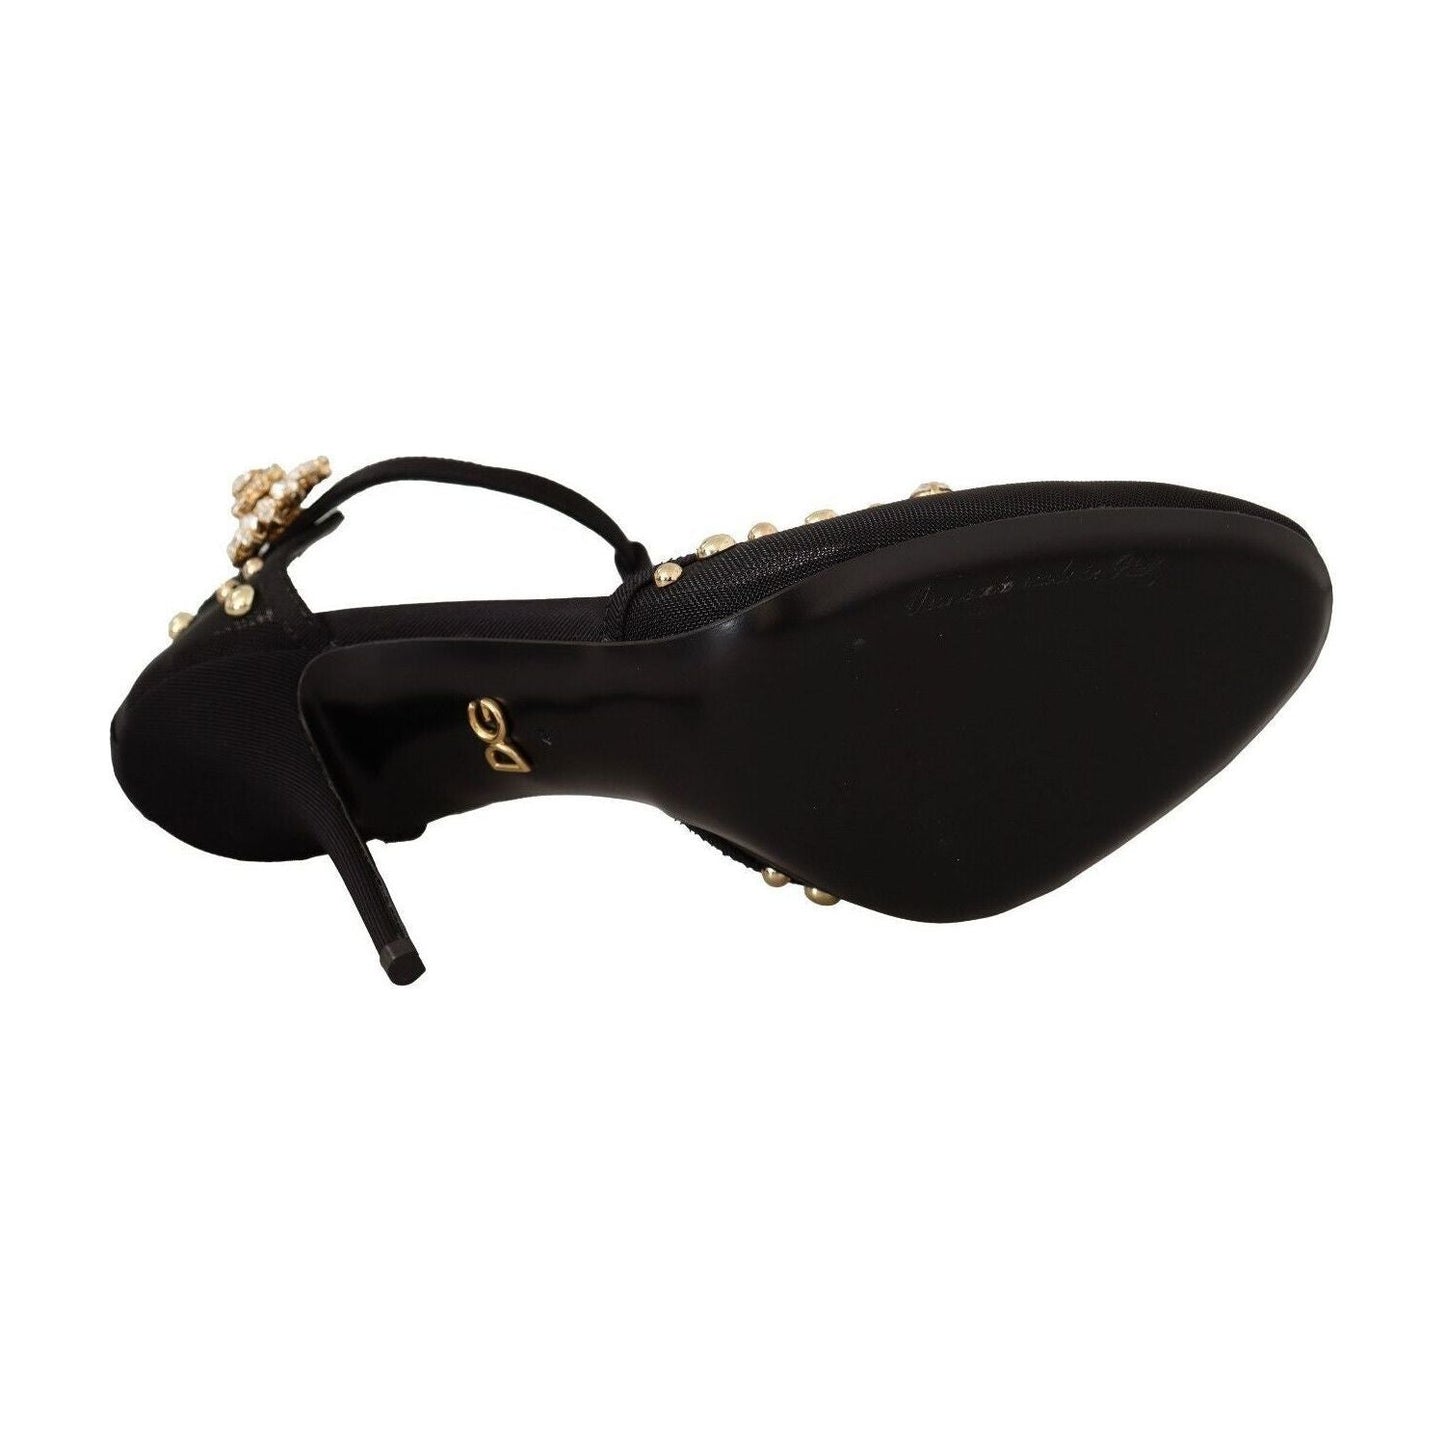 Dolce & Gabbana Elegant Crystal-Embellished Mesh T-Strap Pumps black-mesh-crystals-t-strap-heels-pumps-shoes s-l1600-4-68-4b4e449b-95e.jpg